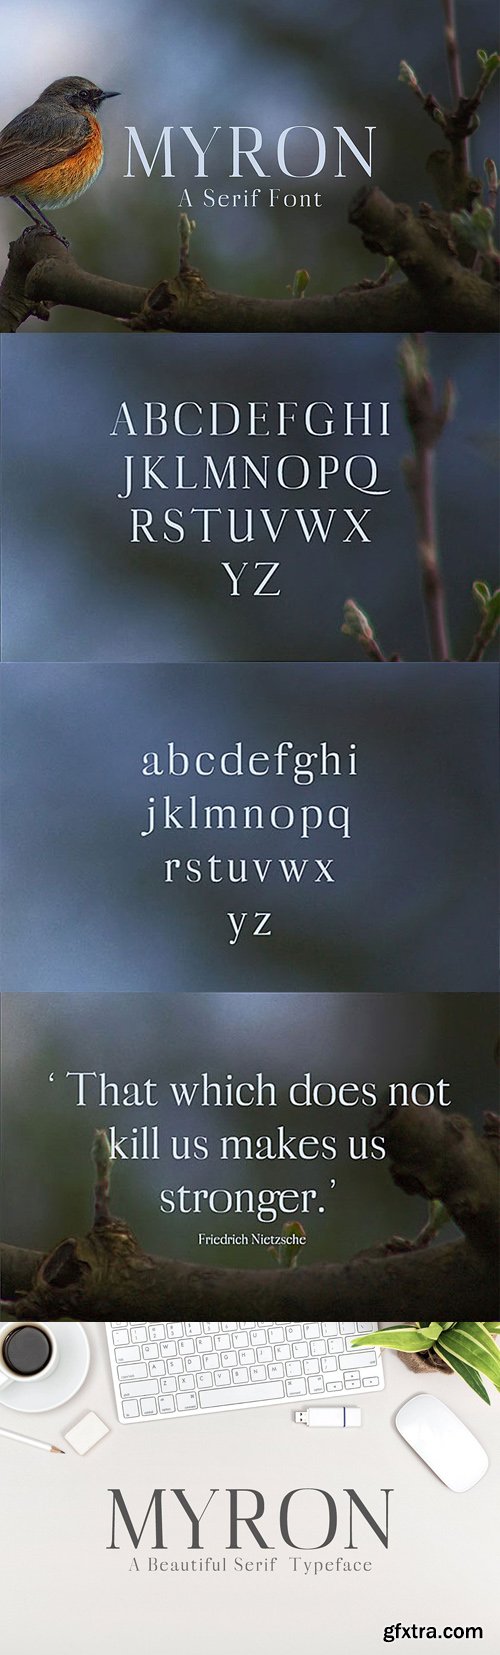 Myron Retro Style Serif Font